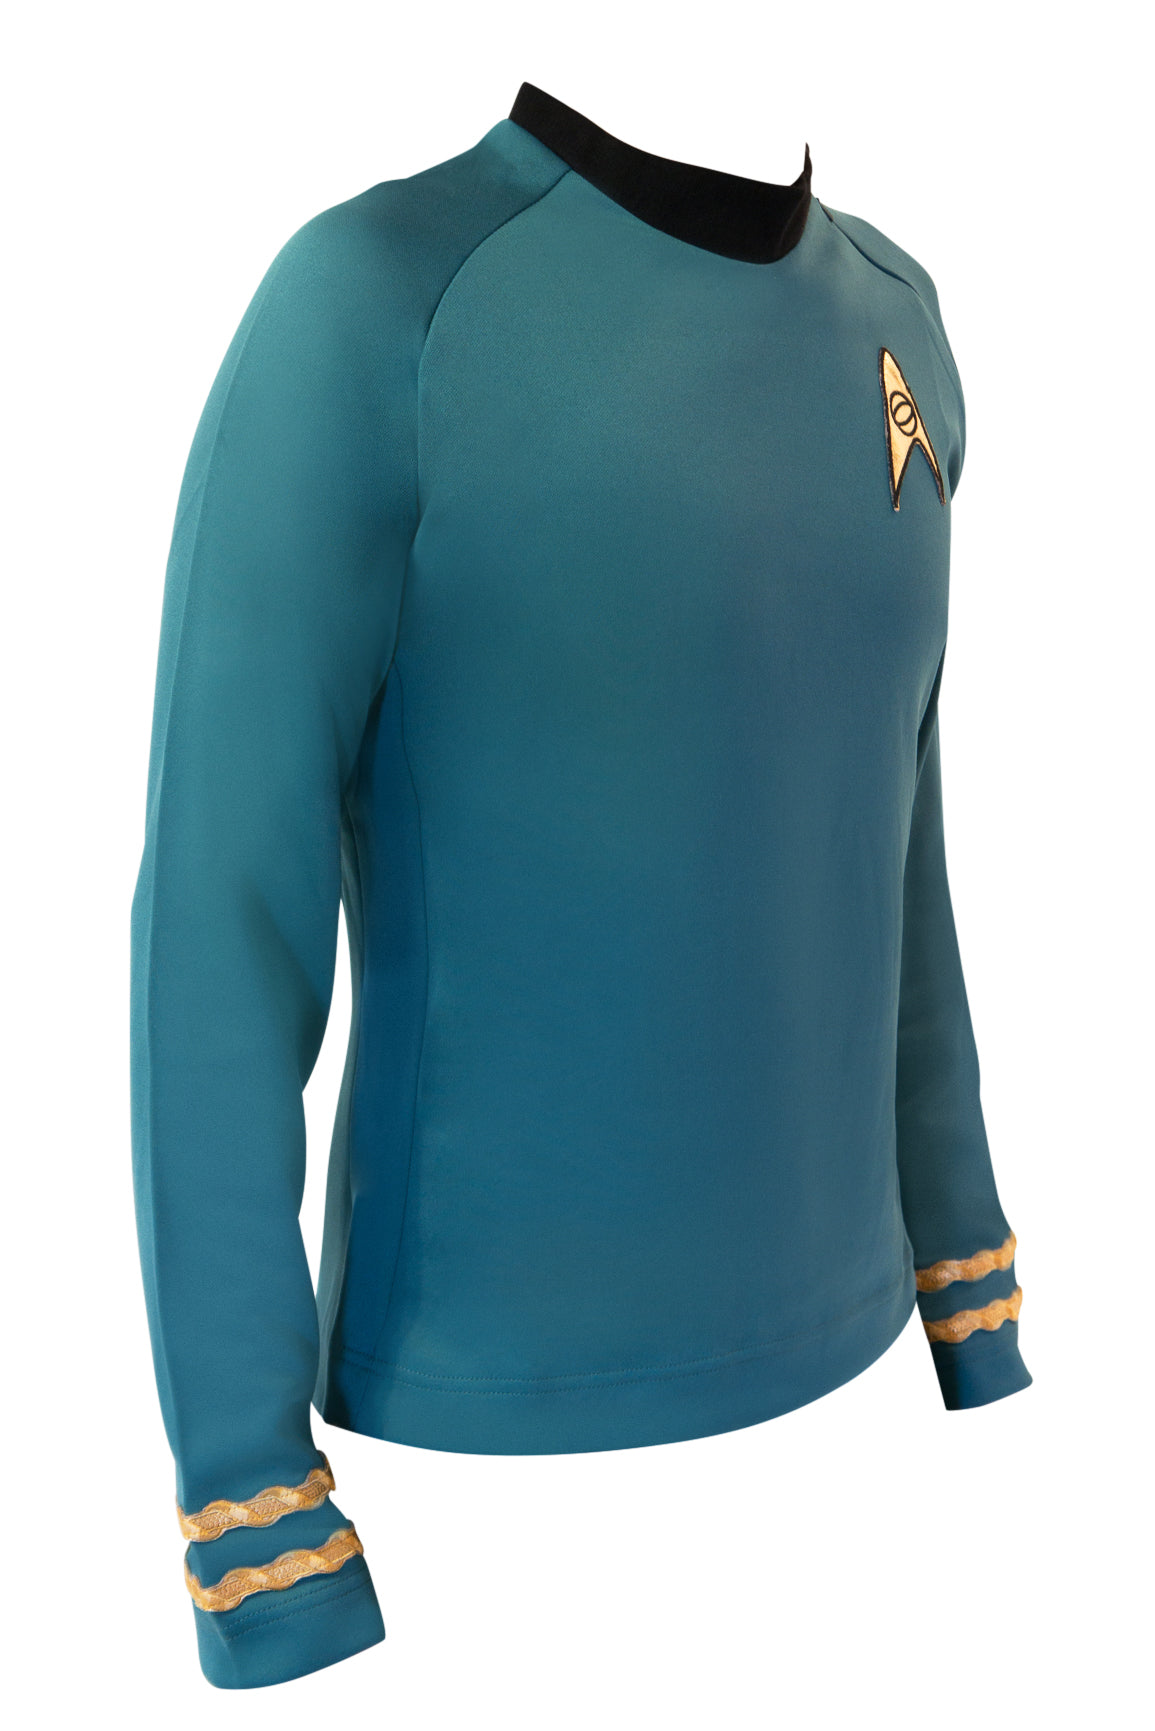 Star Trek I Am Spock Adult Costume Hoodie